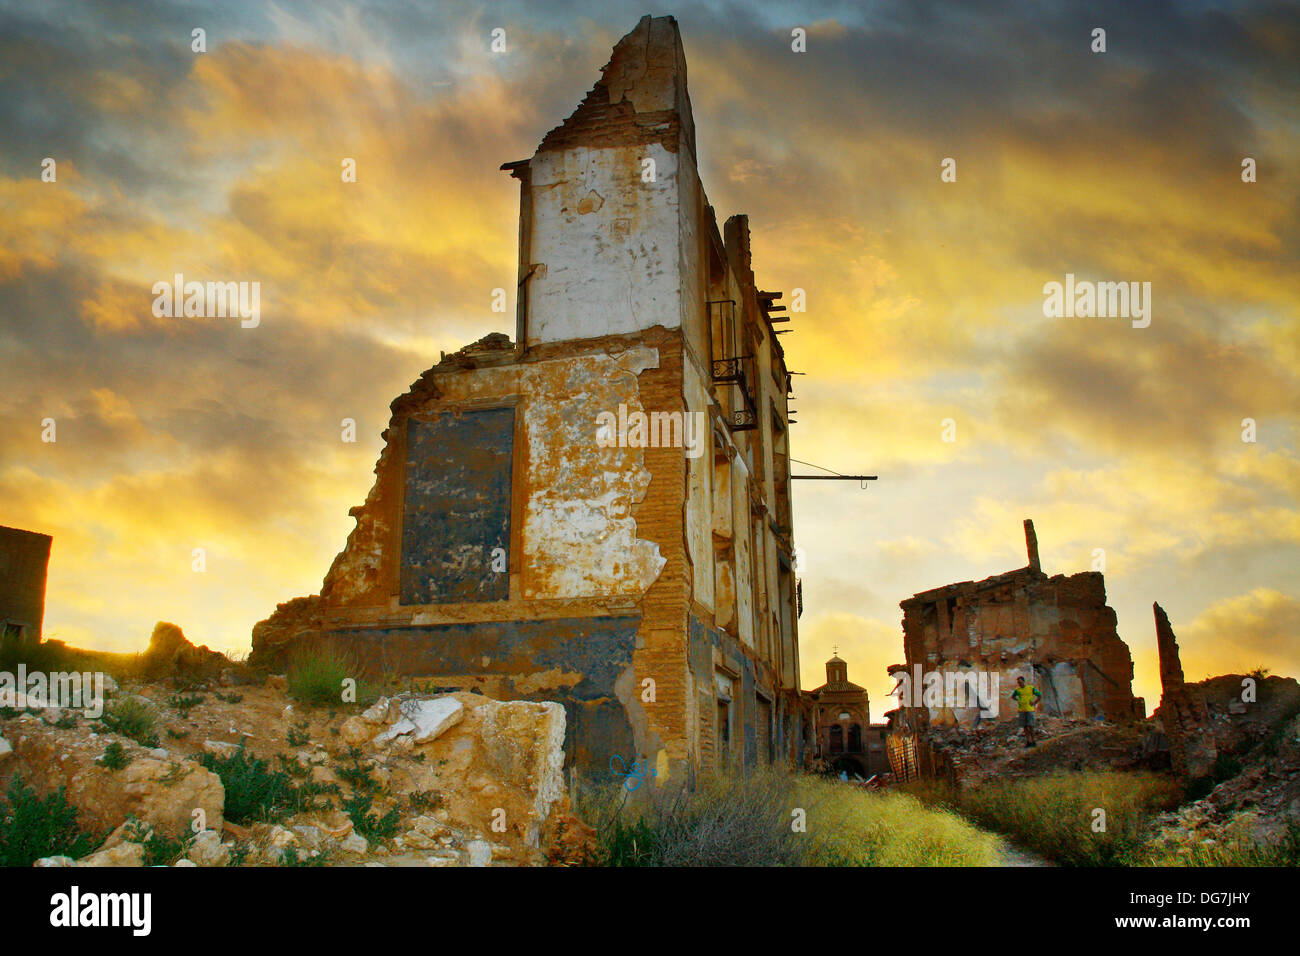 Belchite Old Town  Ruins of the Spanish Civil War 1936-1939  Zaragoza, Aragon, Spain Stock Photo